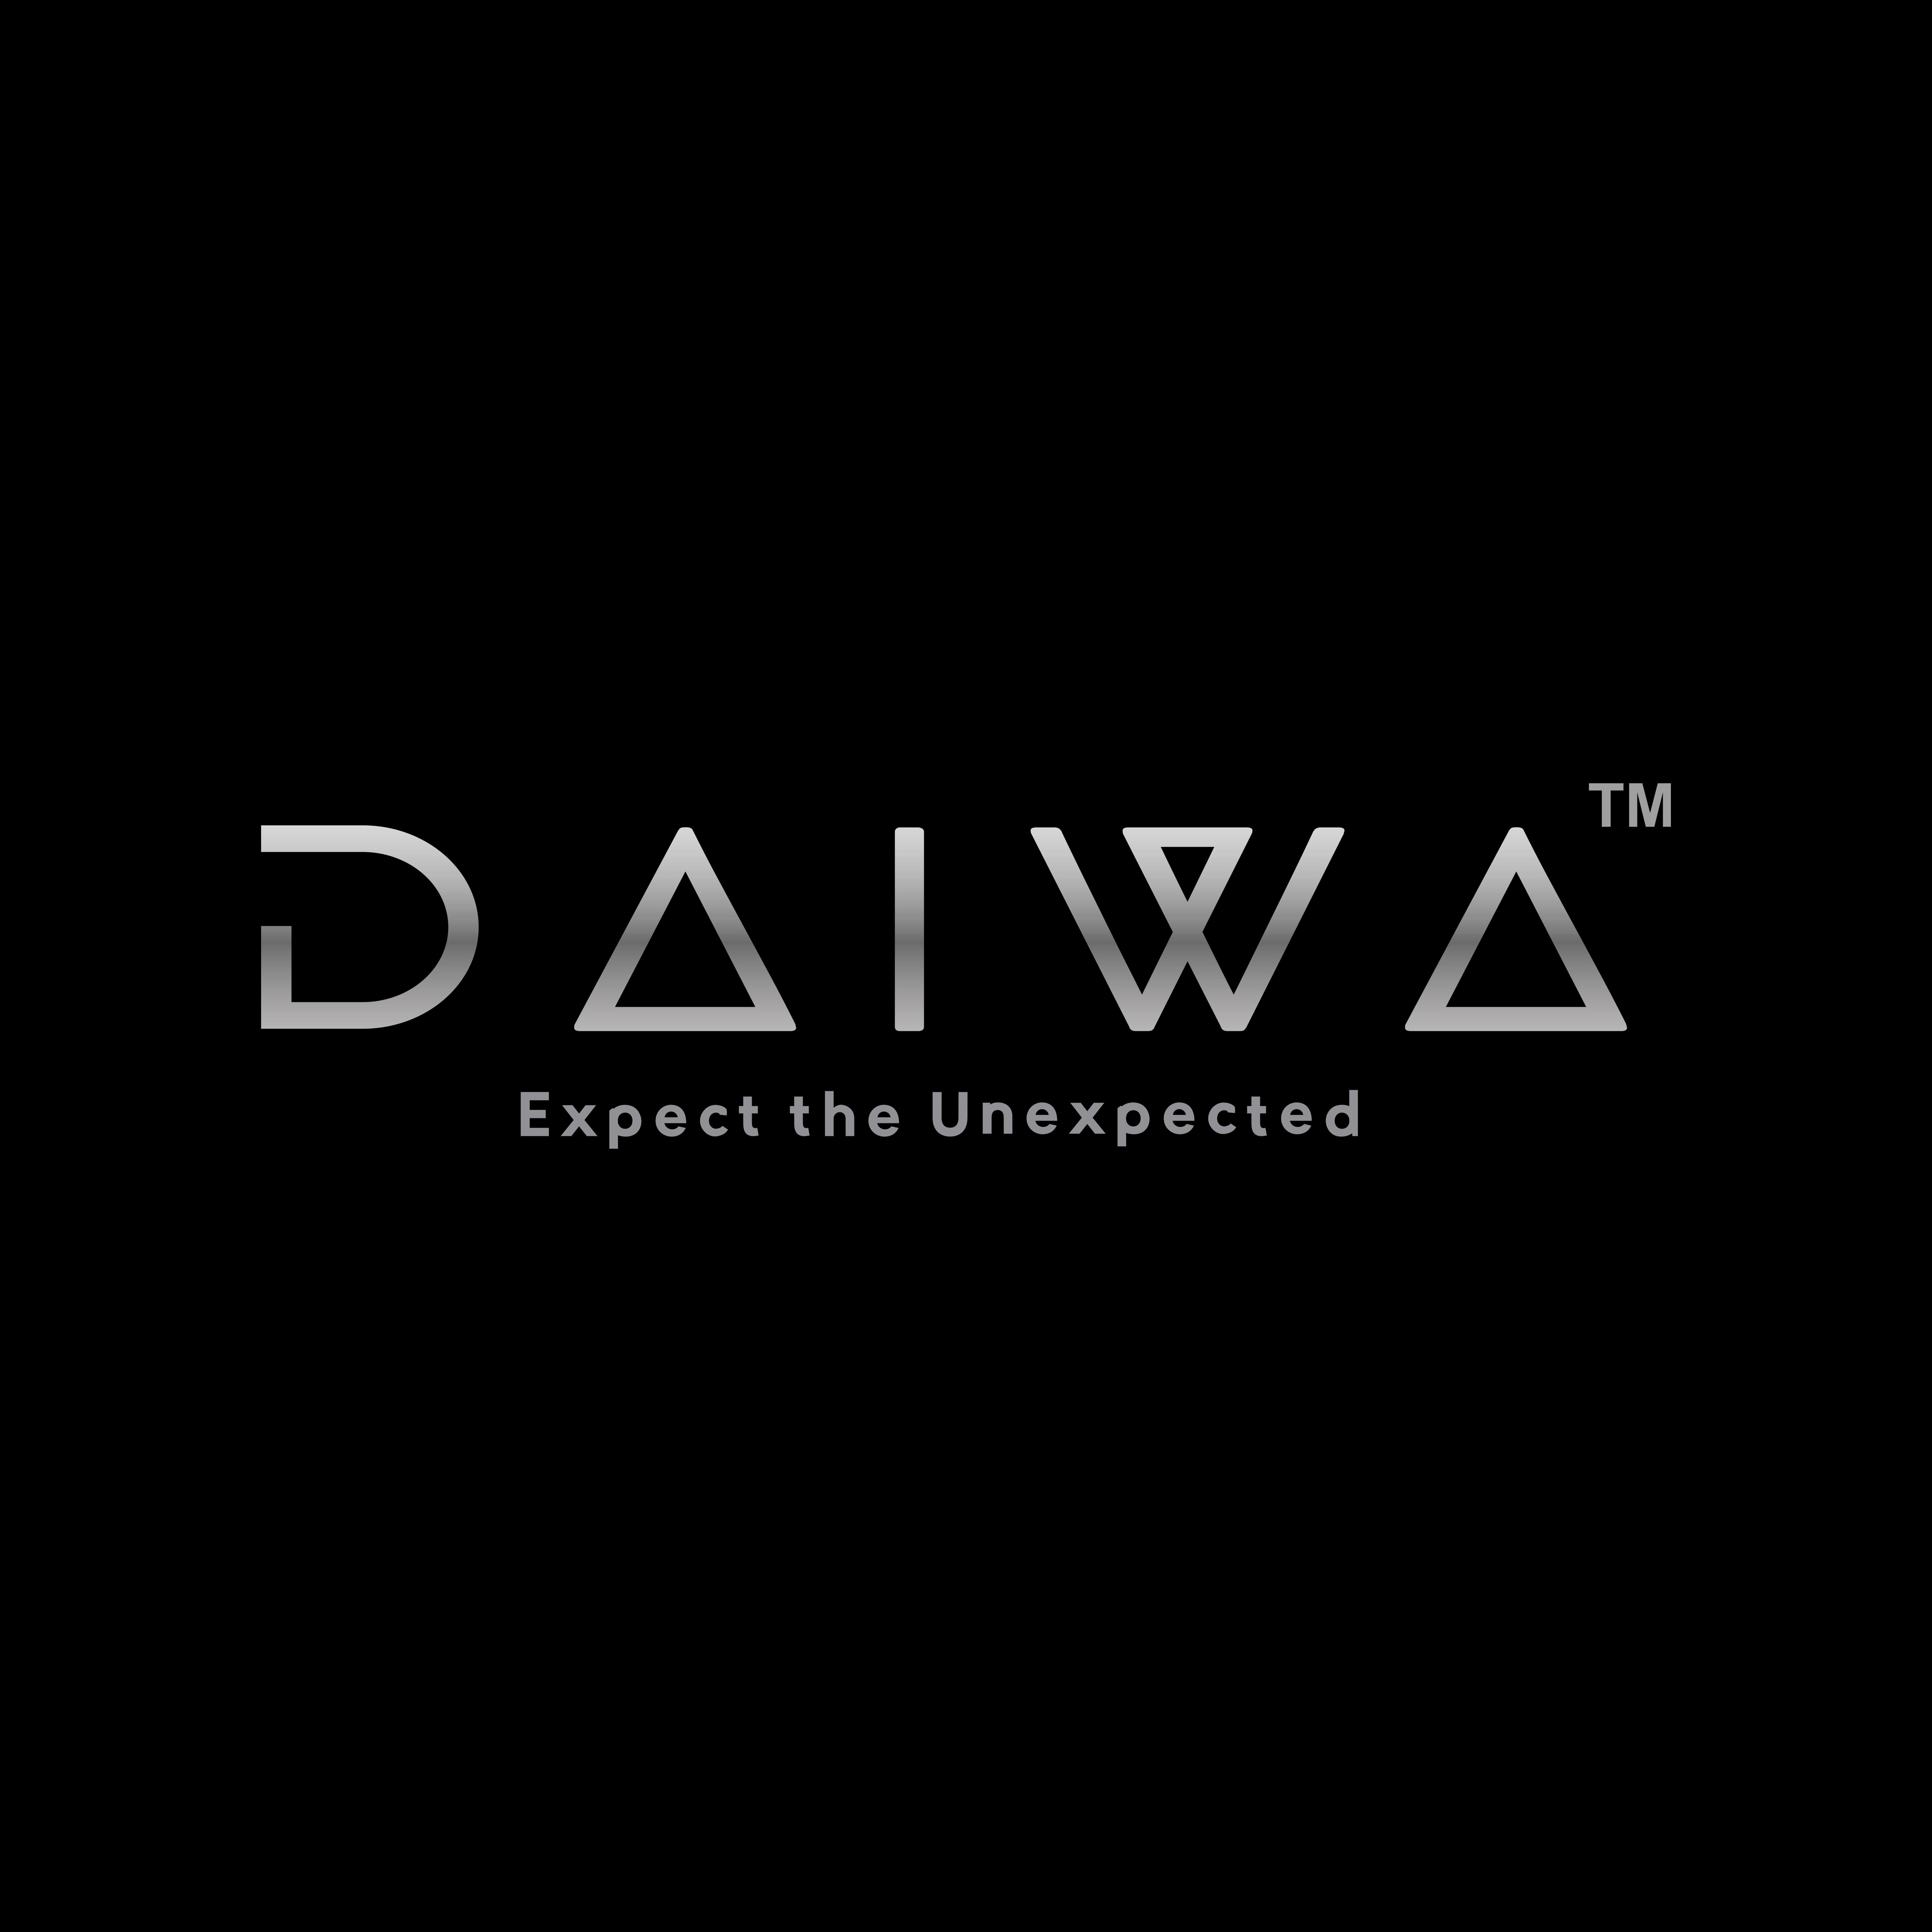 Daiwa Logo - File:Daiwa logo black bg - Copy.jpg - Wikimedia Commons